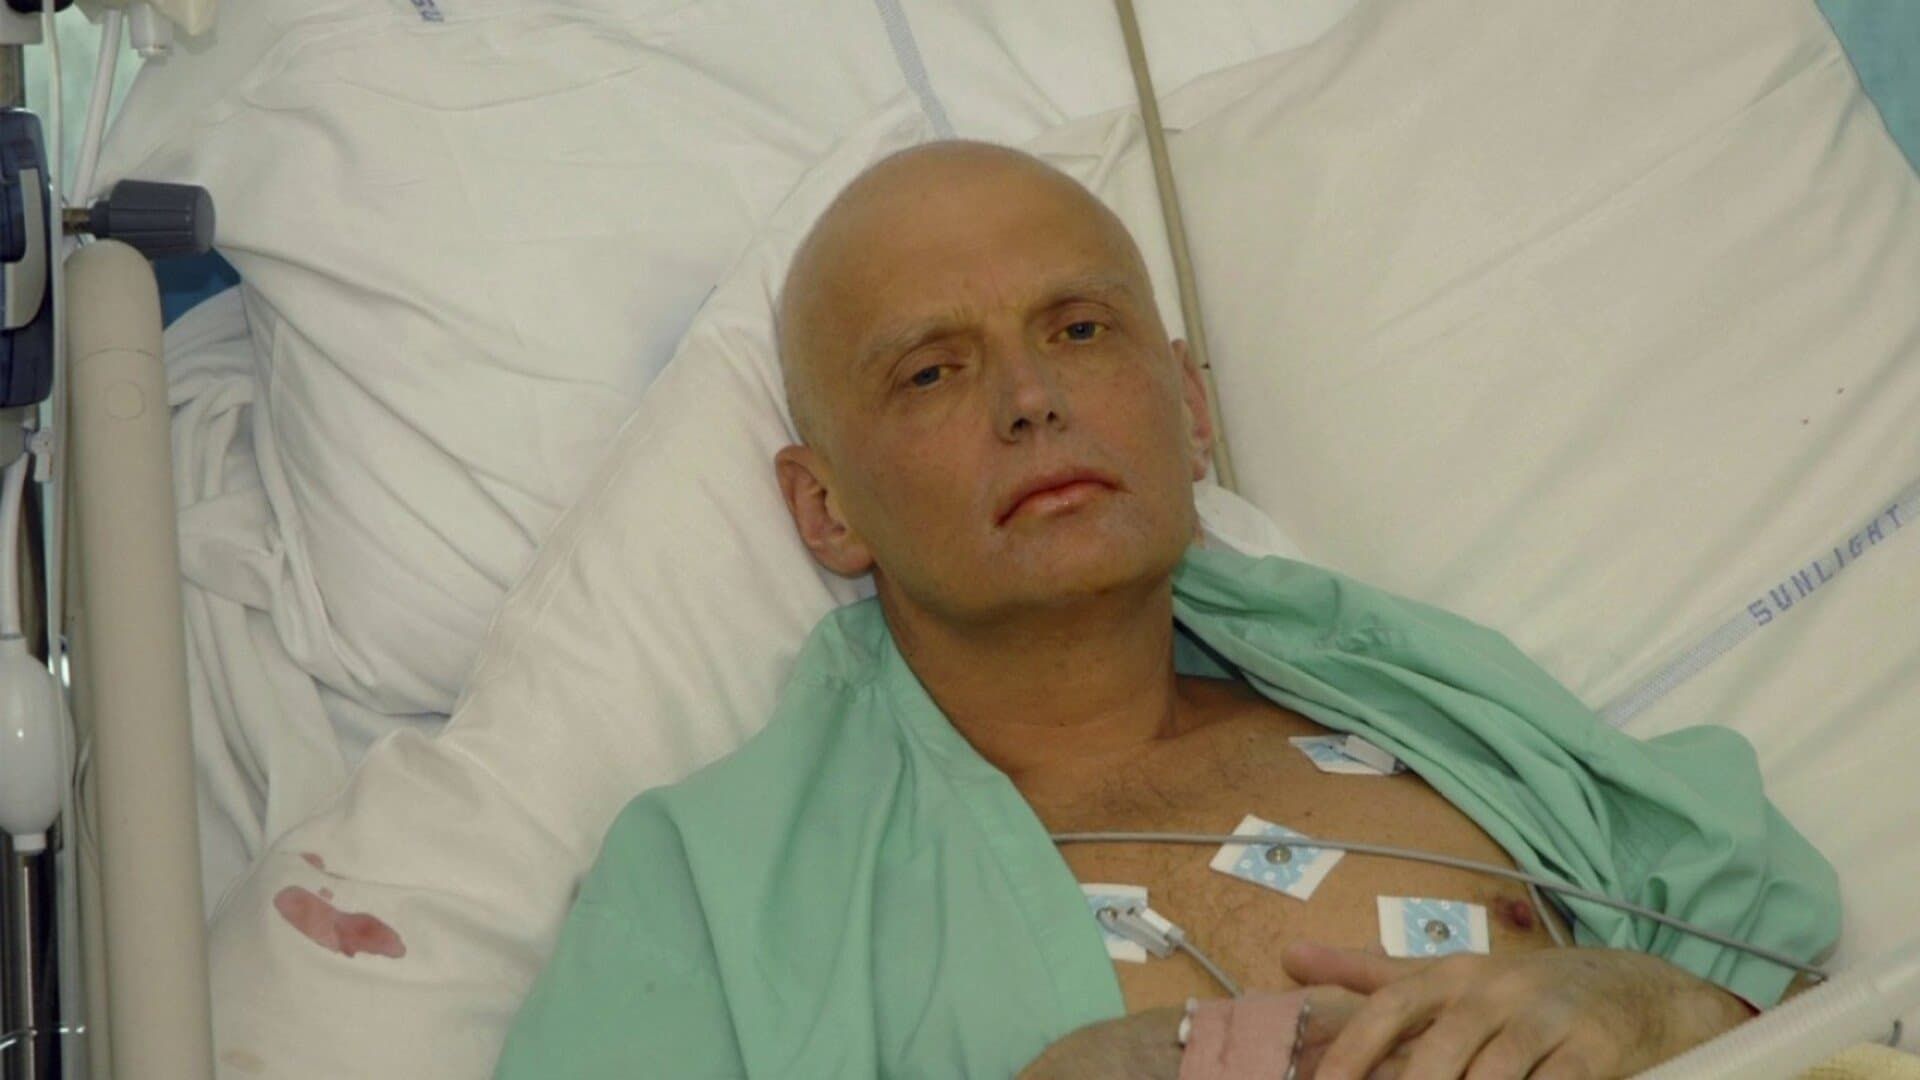 Litvinenko - The Mayfair Poisoning background